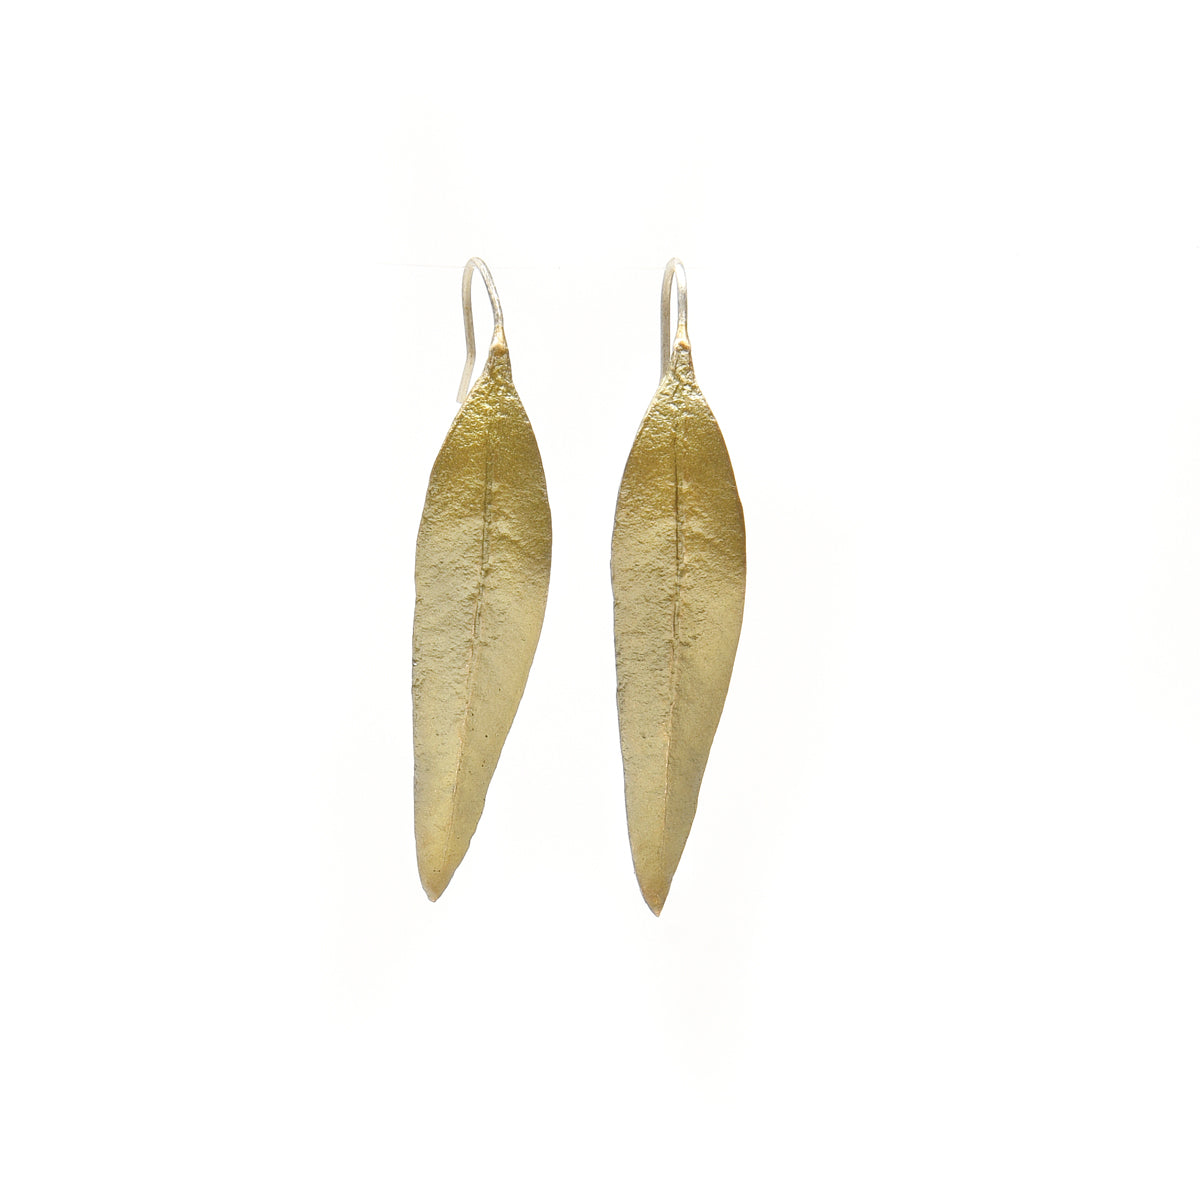 Eucalyptus Leaf Earrings